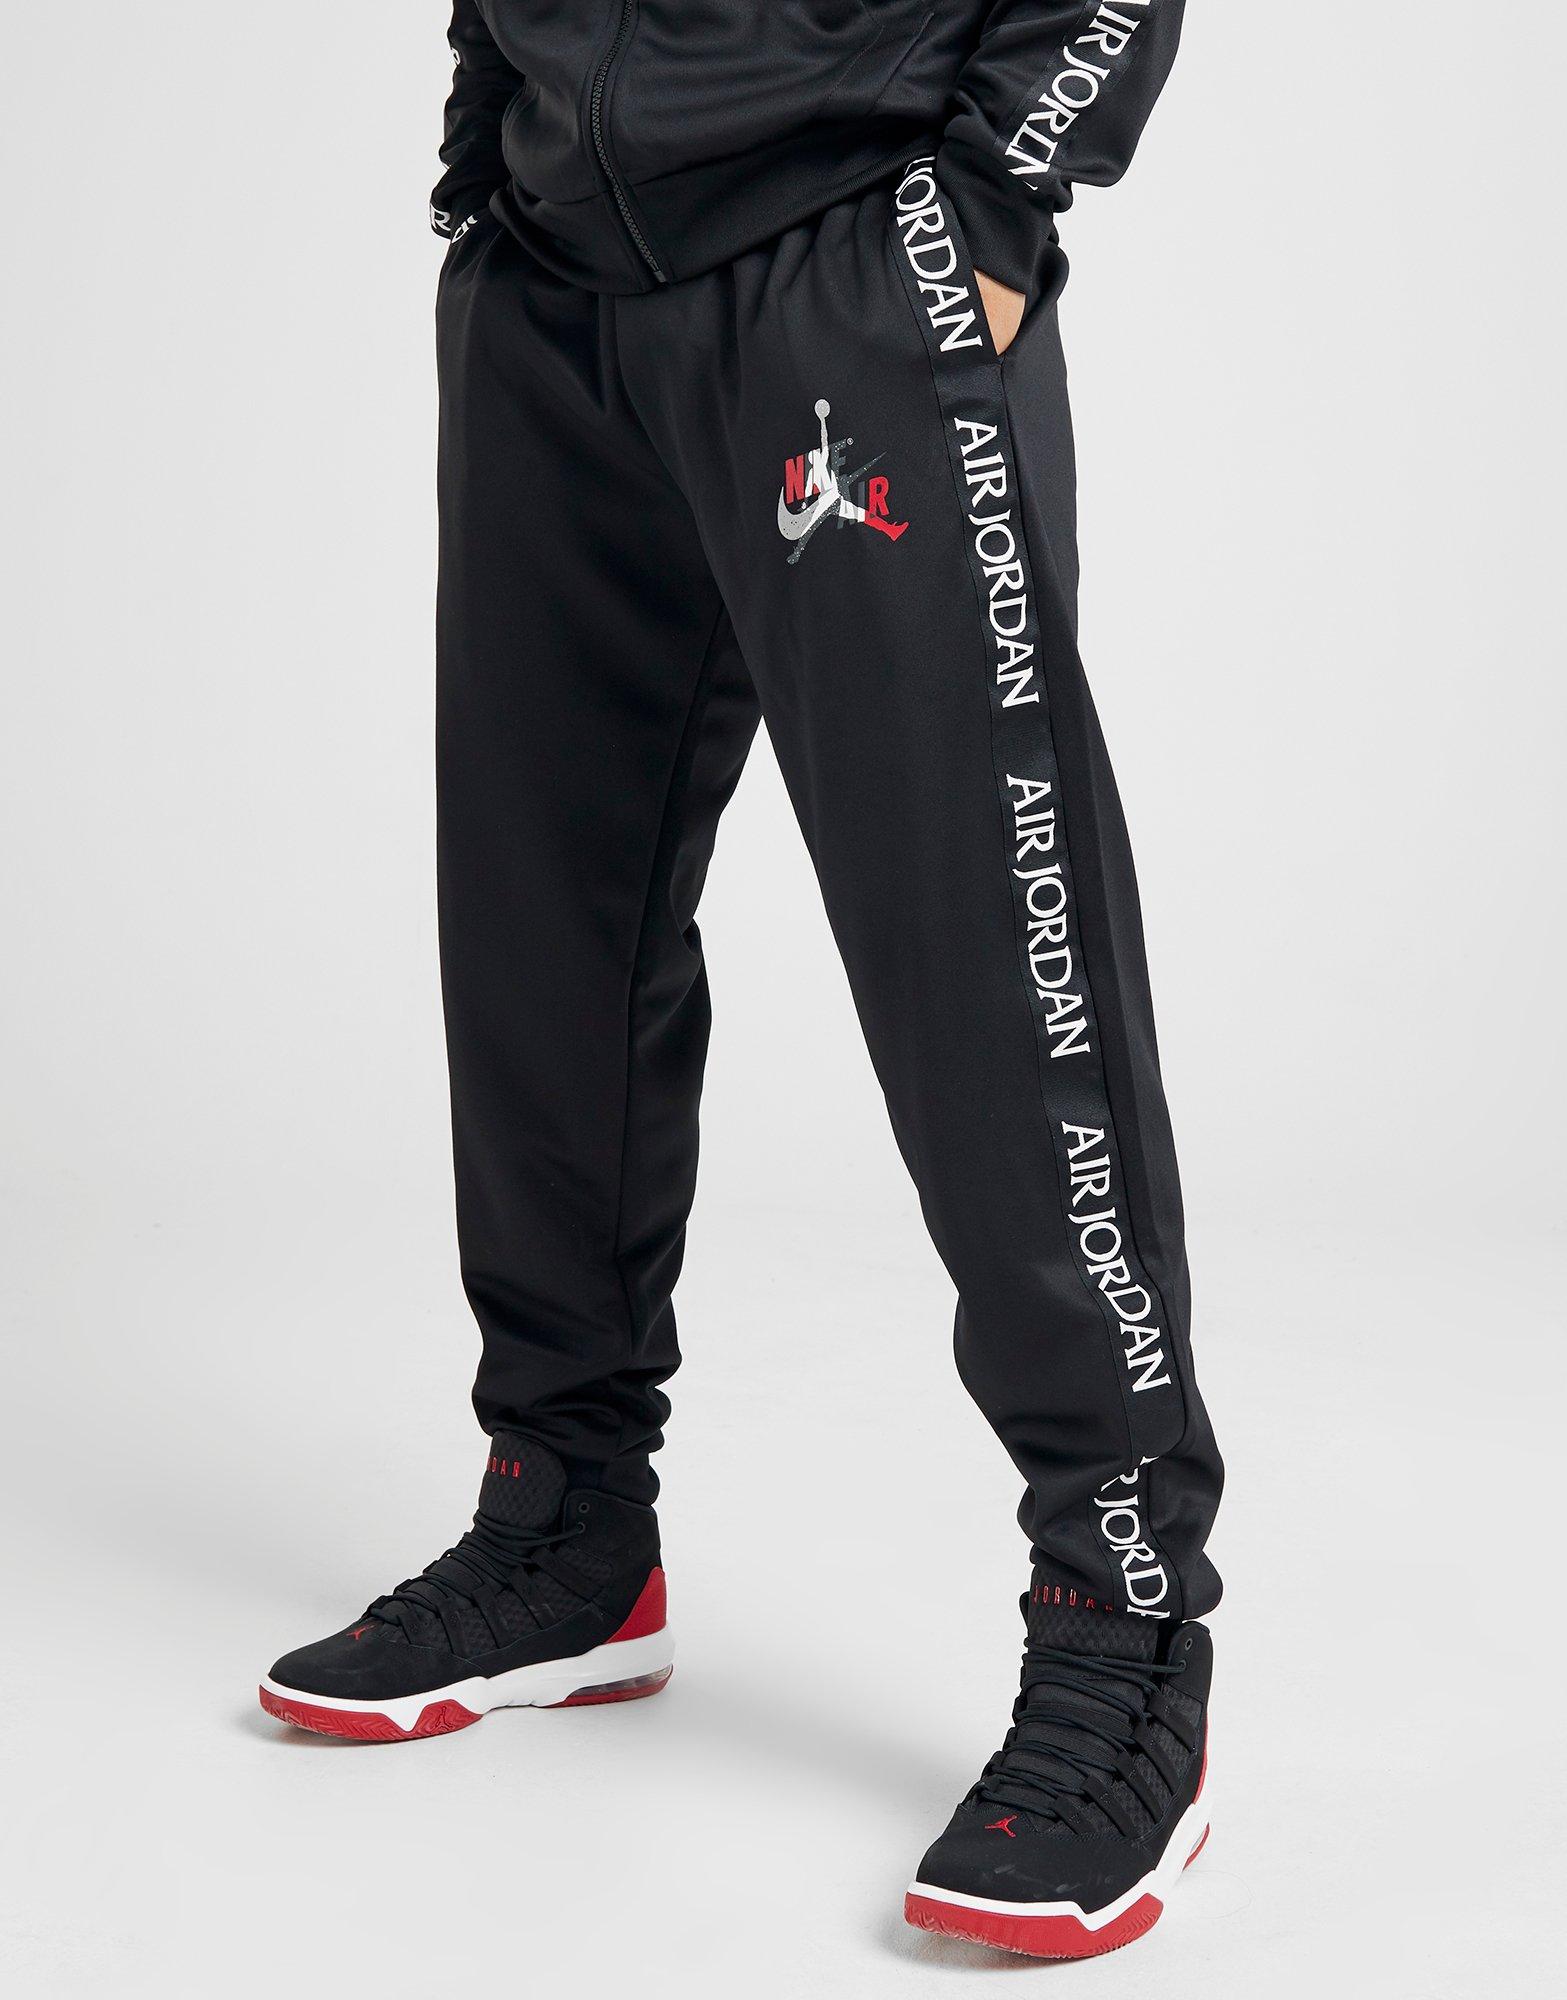 Black Jordan Tricot Warm Up Pants | JD 